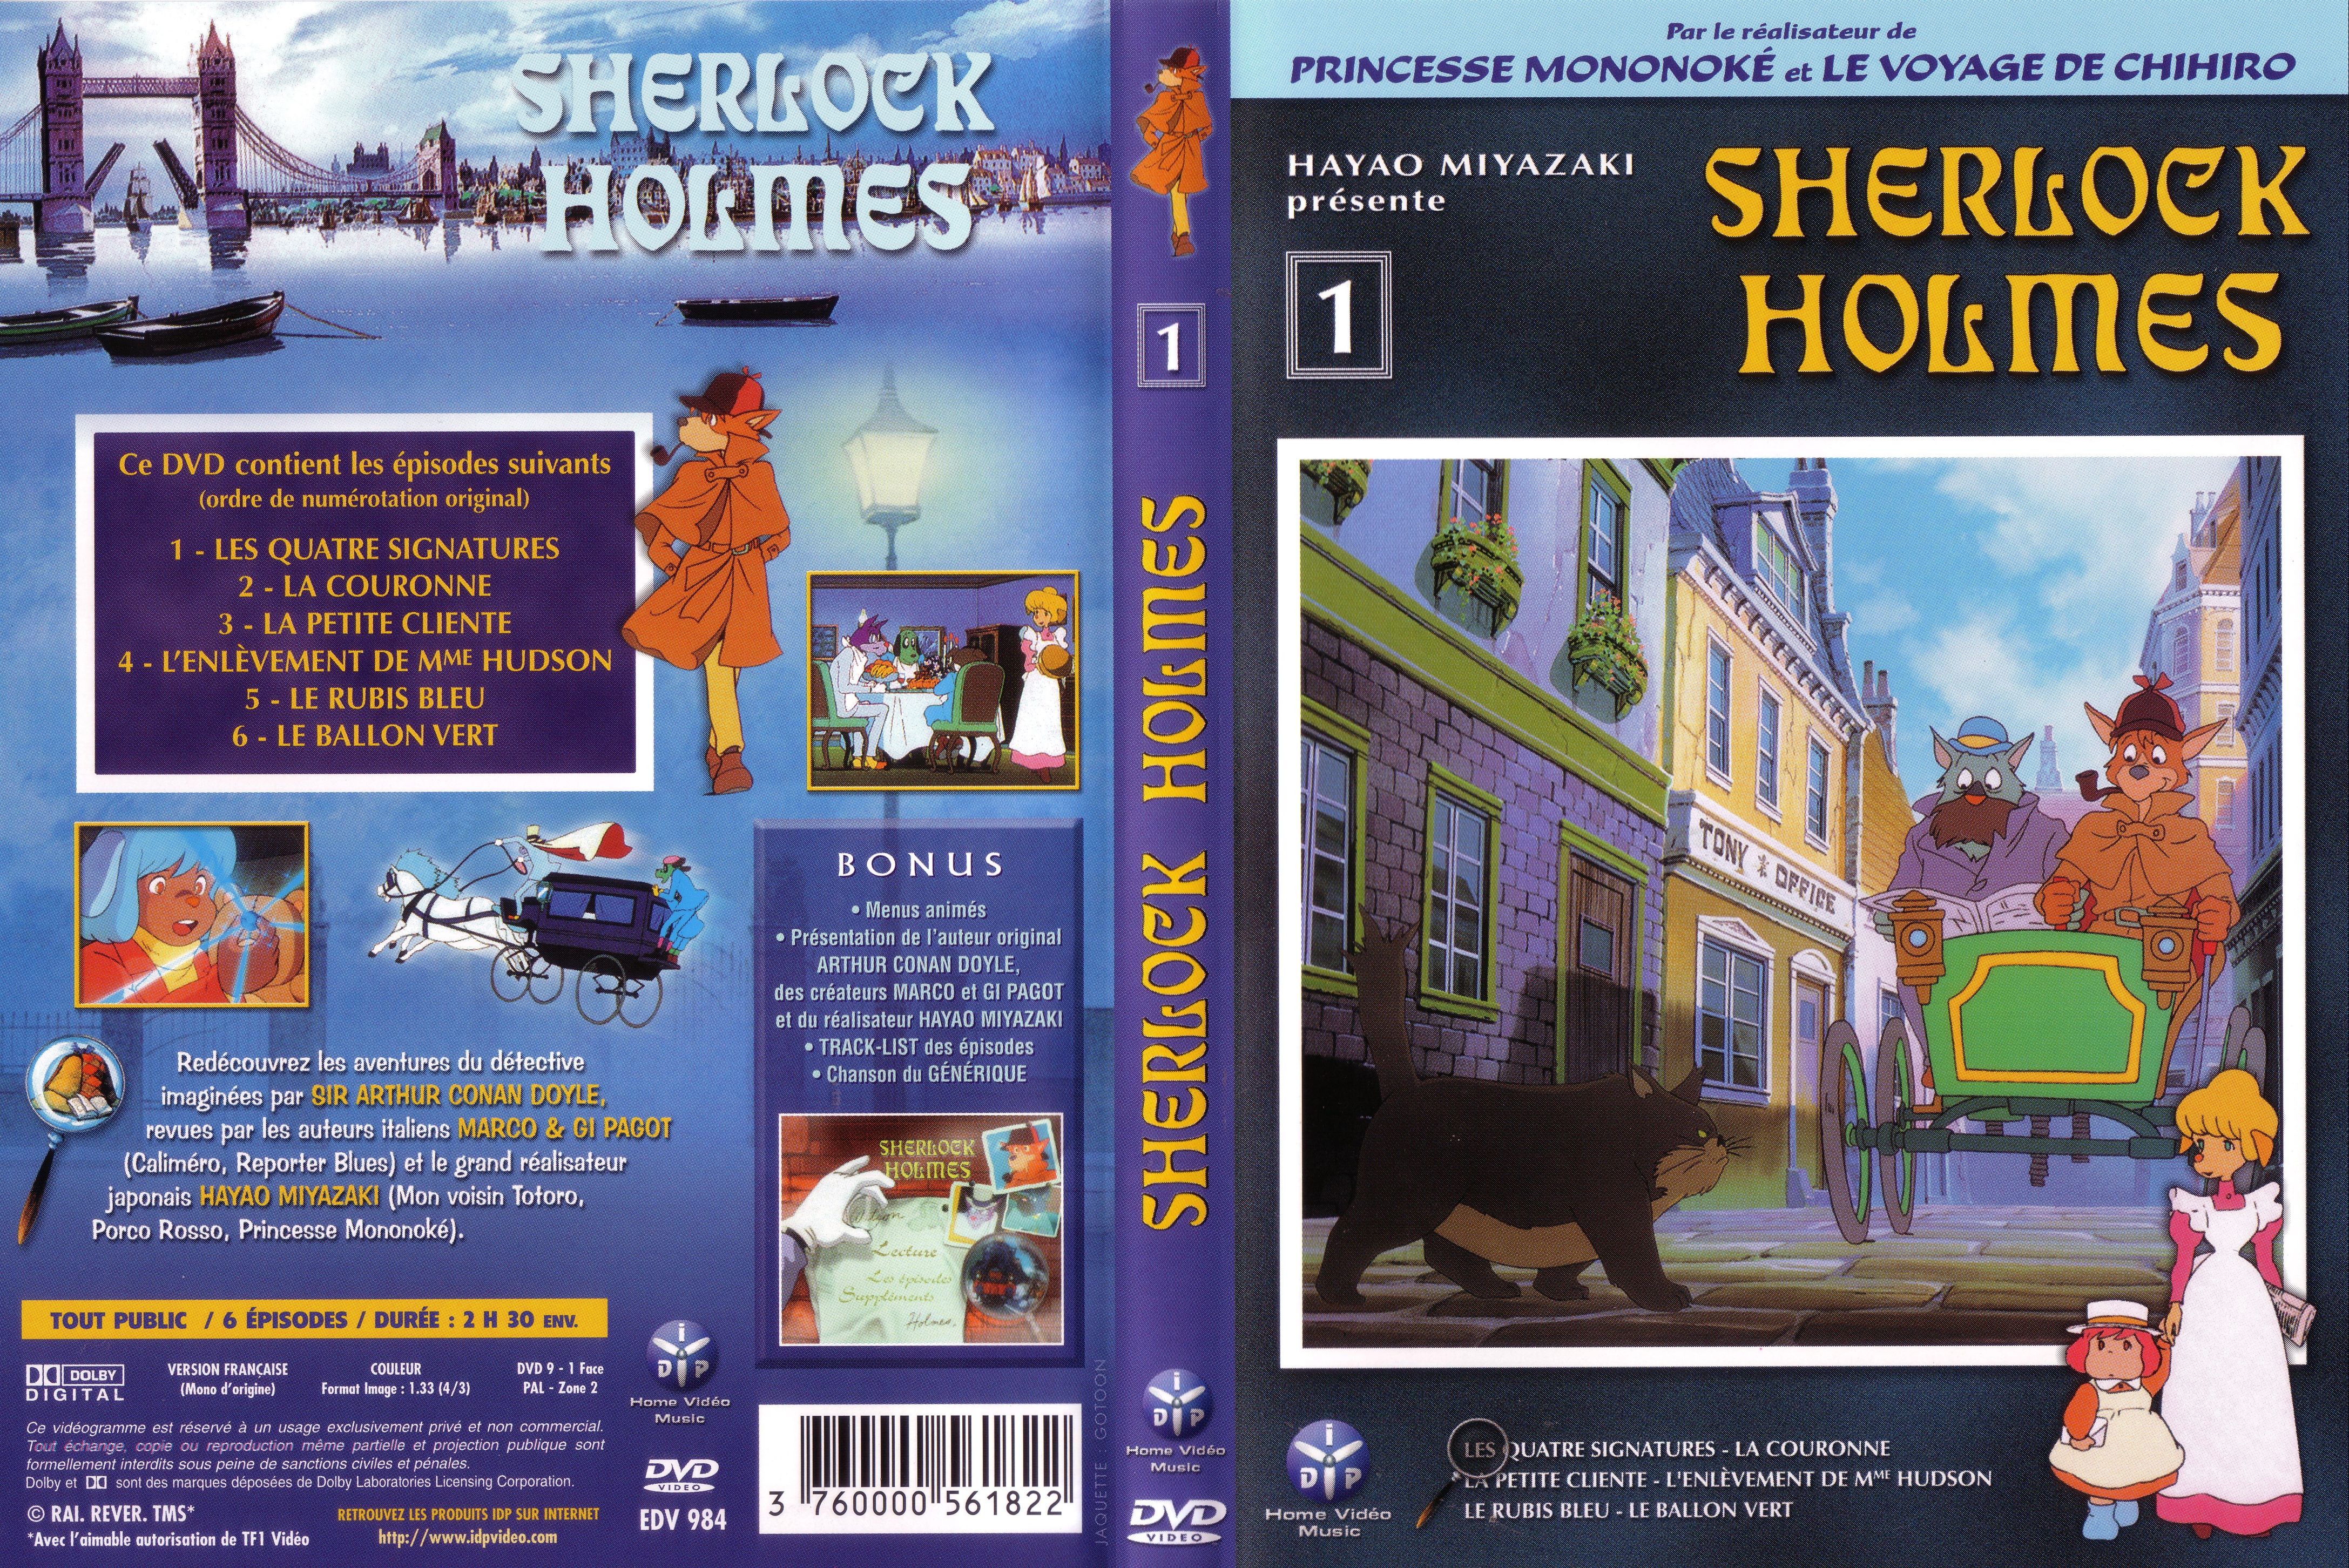 Jaquette DVD Sherlock Holmes vol 1